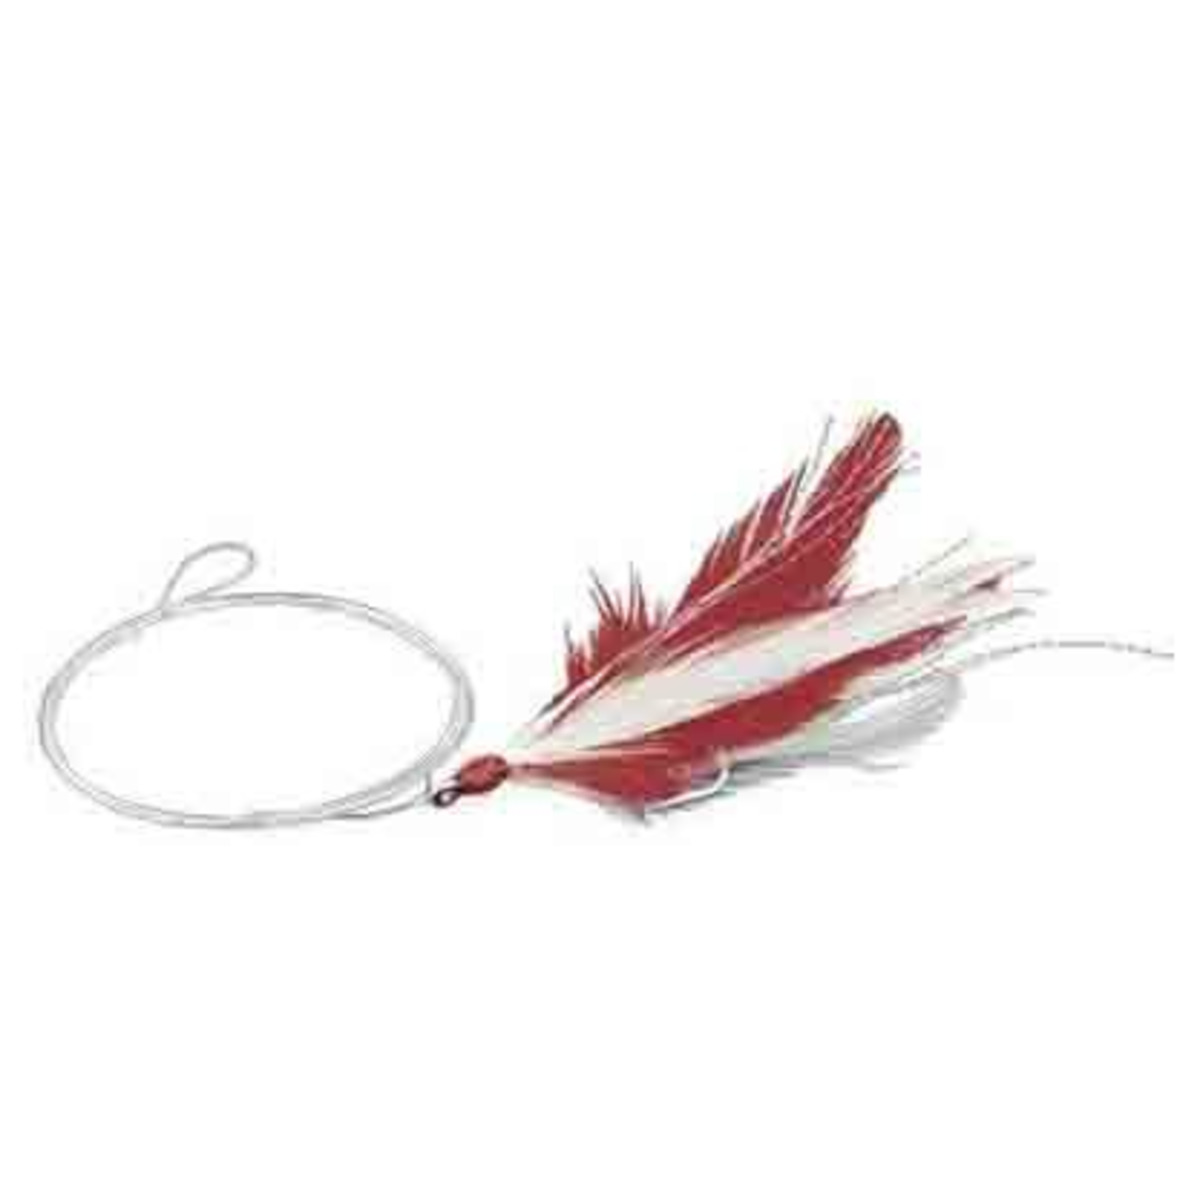 Tubertini Trolling Feather - 05 Red-White - Series 271 n. 2/0 - Diameter 0.40 mm    